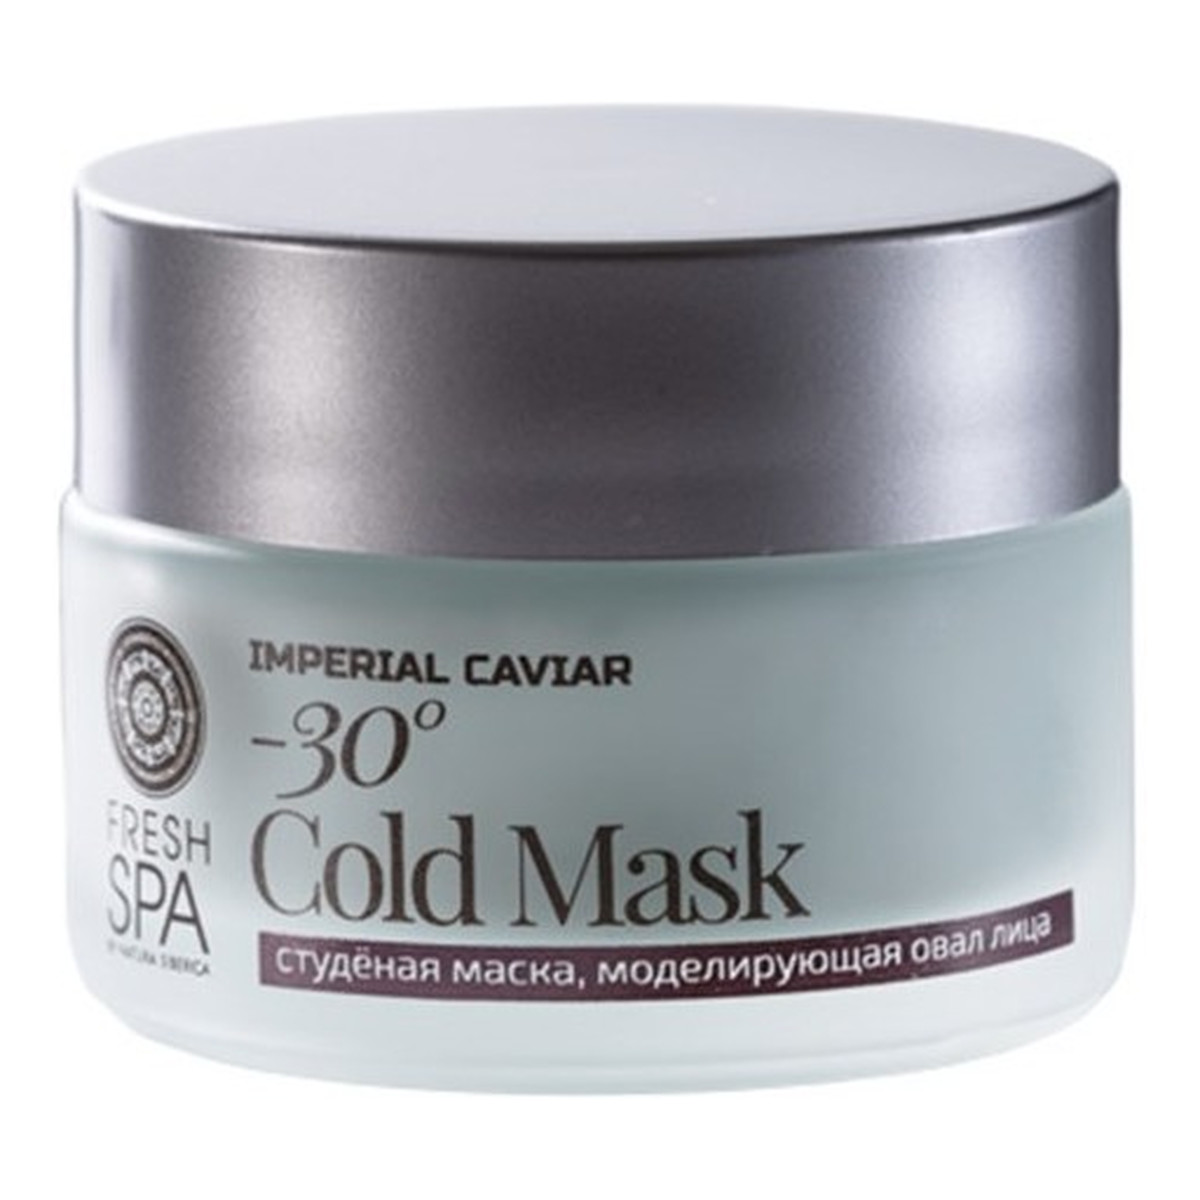 Natura Siberica FRESH SPA Imperial Caviar Zimna maska modelująca do twarzy 50ml